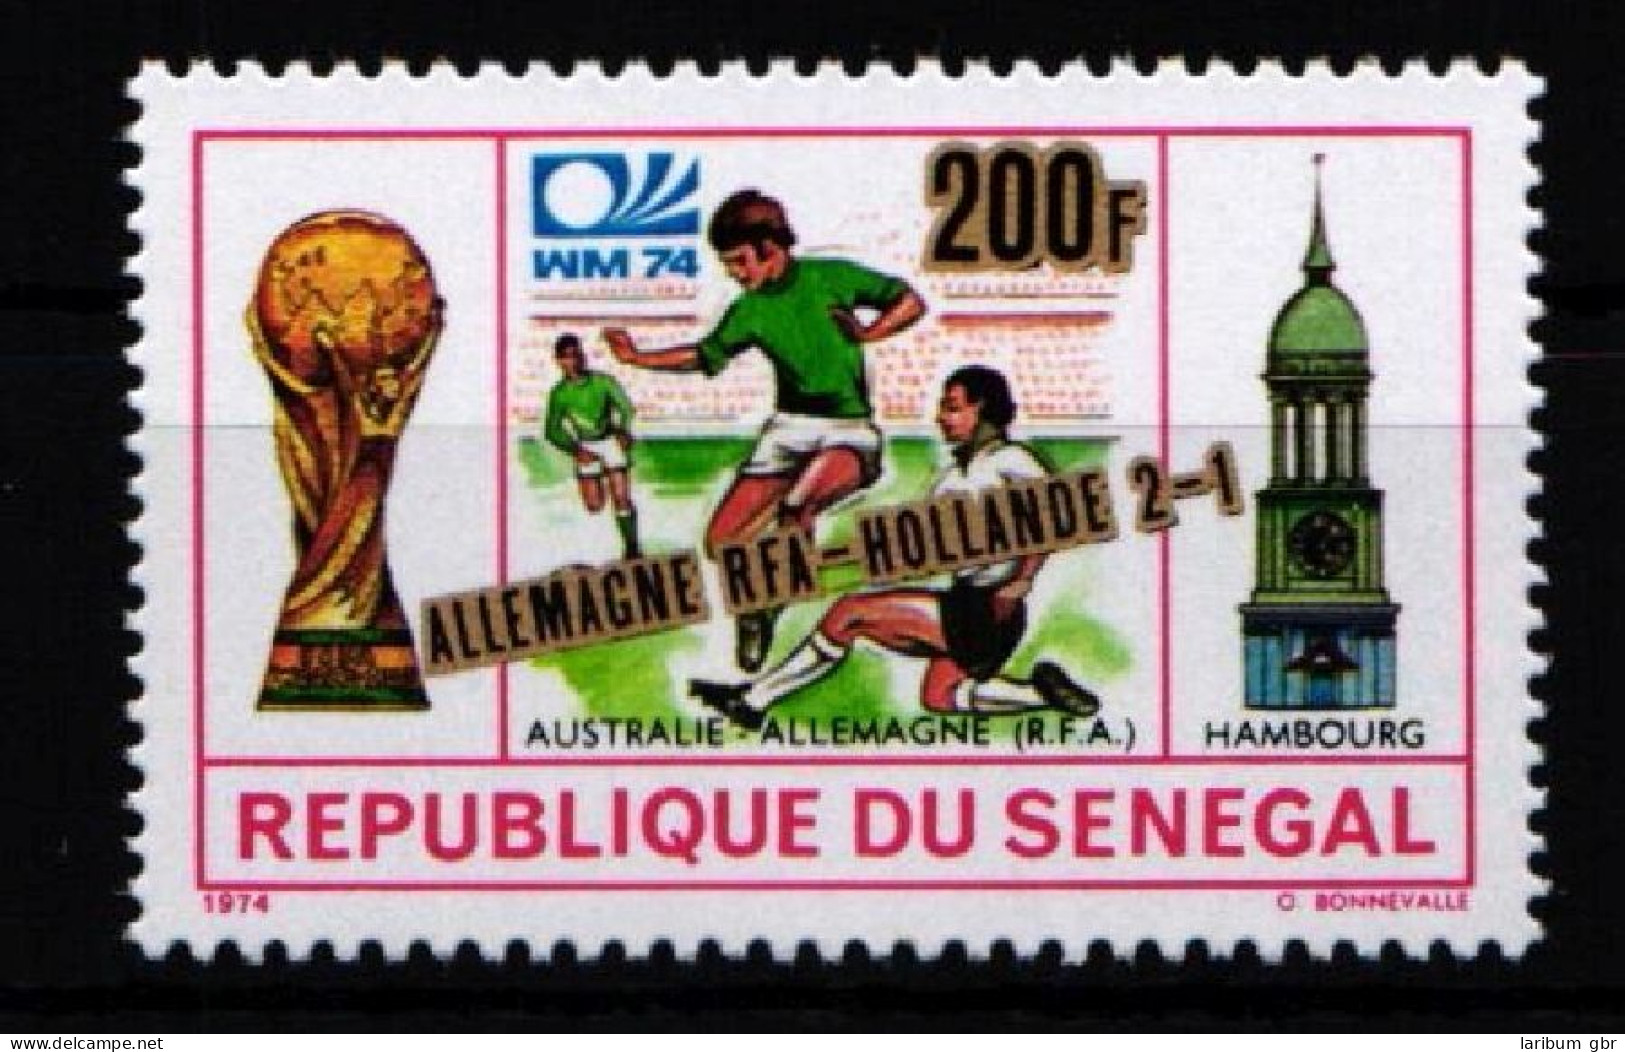 Senegal 561 Postfrisch Fußball #KO241 - Sénégal (1960-...)